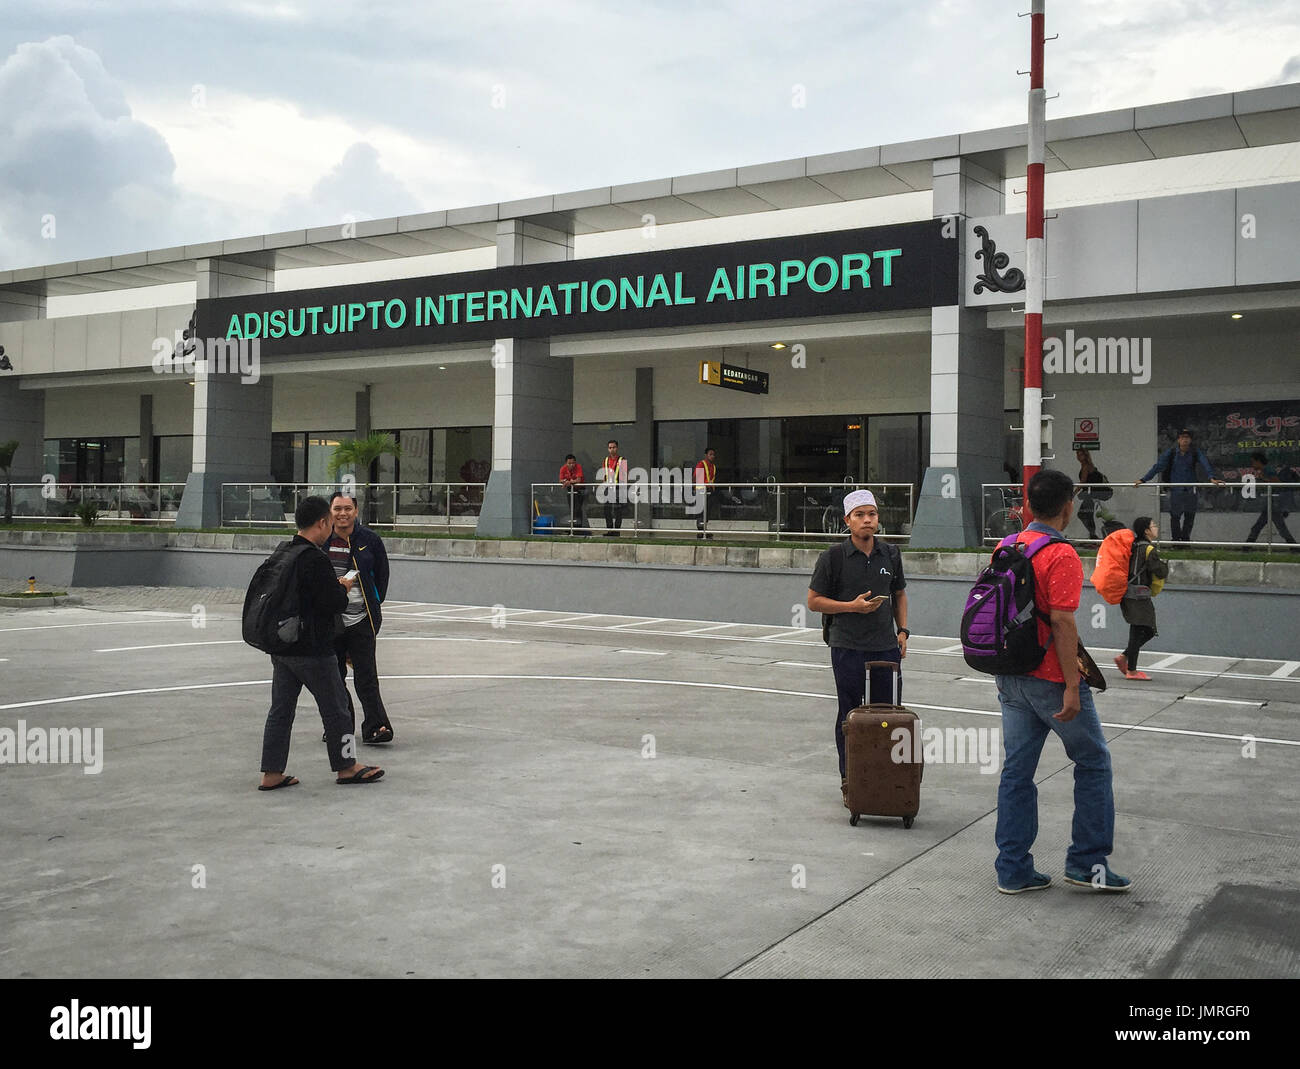 Yogyakarta, Indonesia - Apr 13, 2016. People at Adisutjipto Airport in Yogyakarta, Indonesia. The Airport is the 4th busiest airport in the region of  Stock Photo